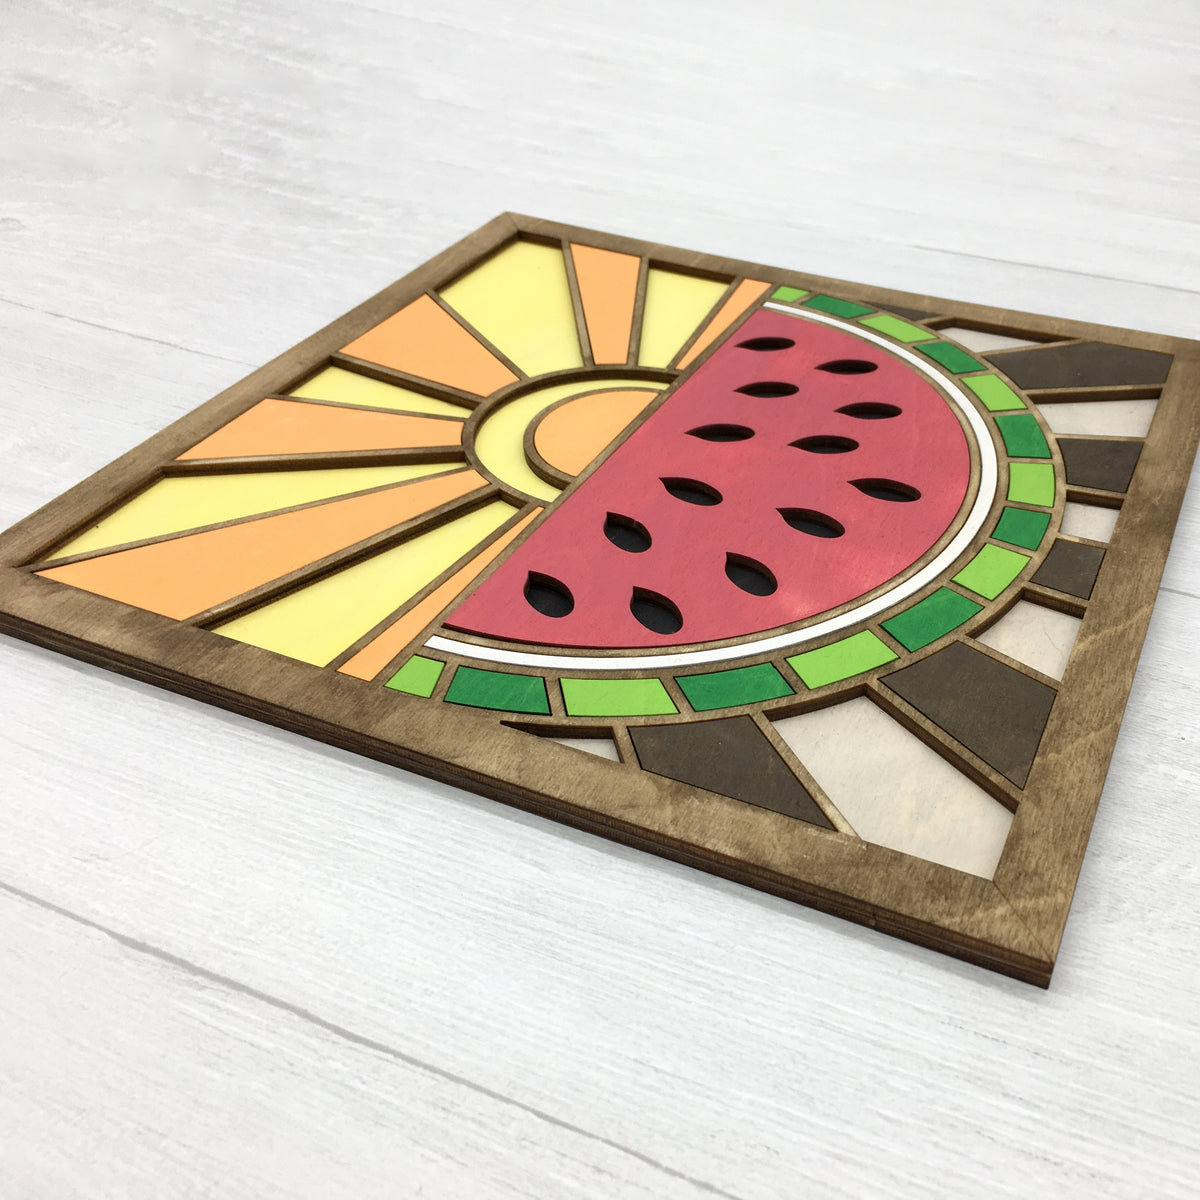 DIY Wooden Watermelon Mosaic Sign